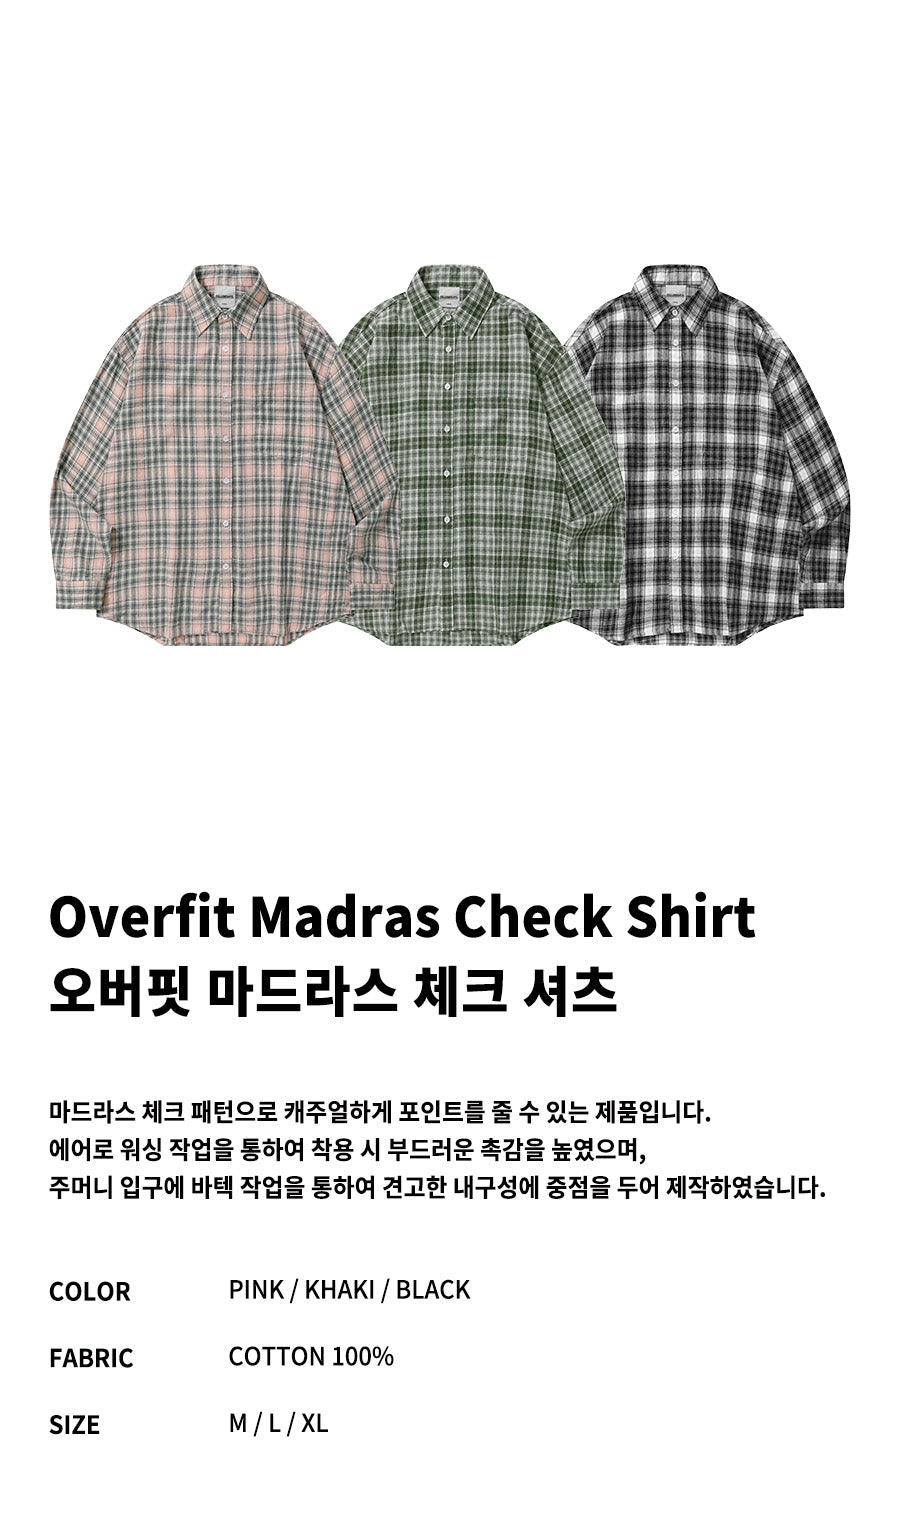 Overfit Madras Check Shirt-Pink